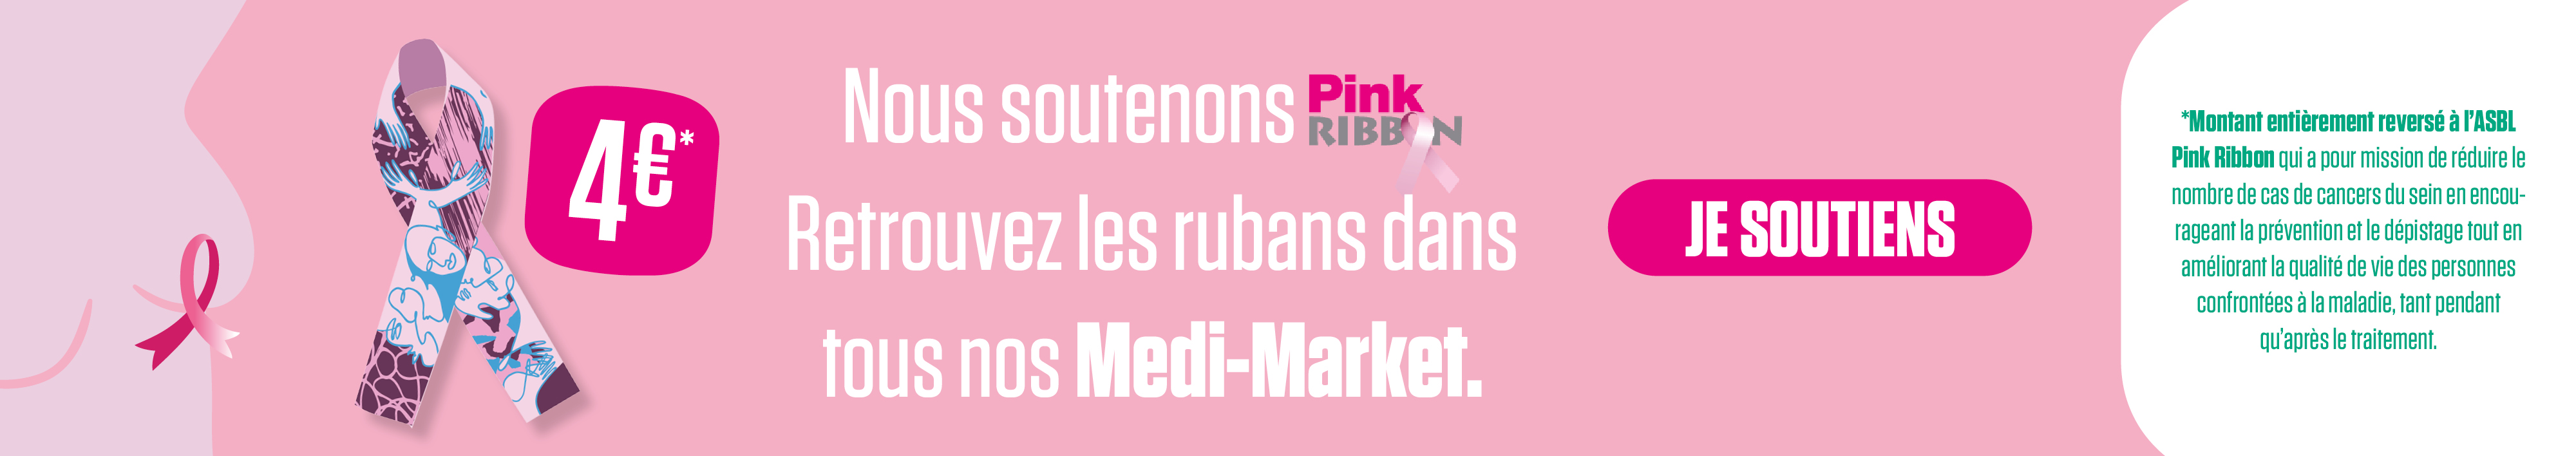 Banner_Pink Ribbon_MM_FR_385x613.jpg